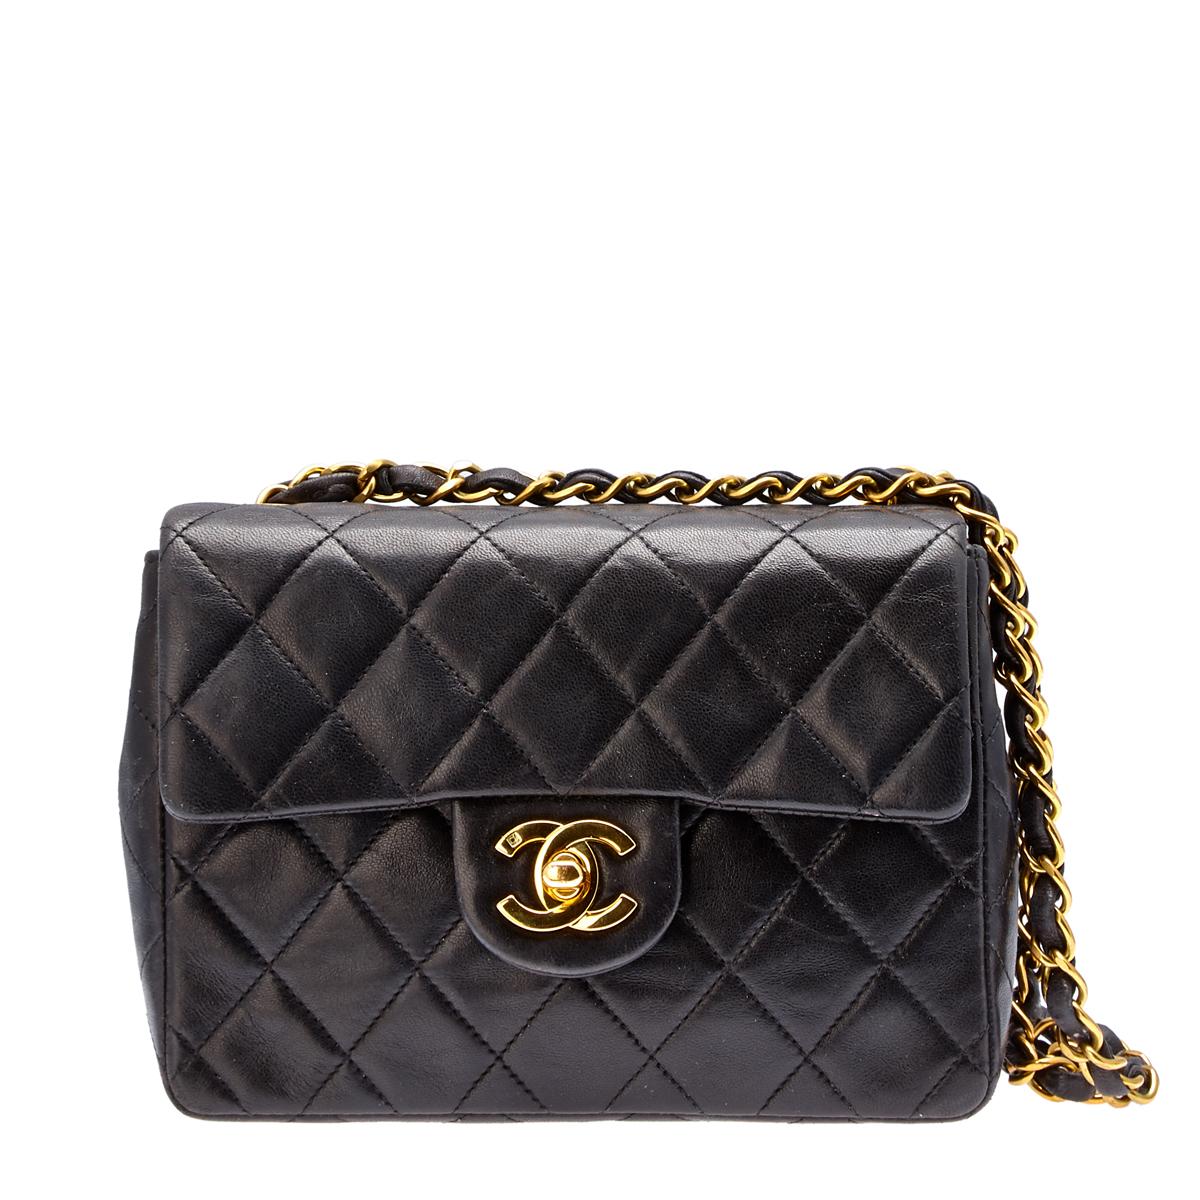 Chanel Classic Handbag Price Increase Font | semashow.com